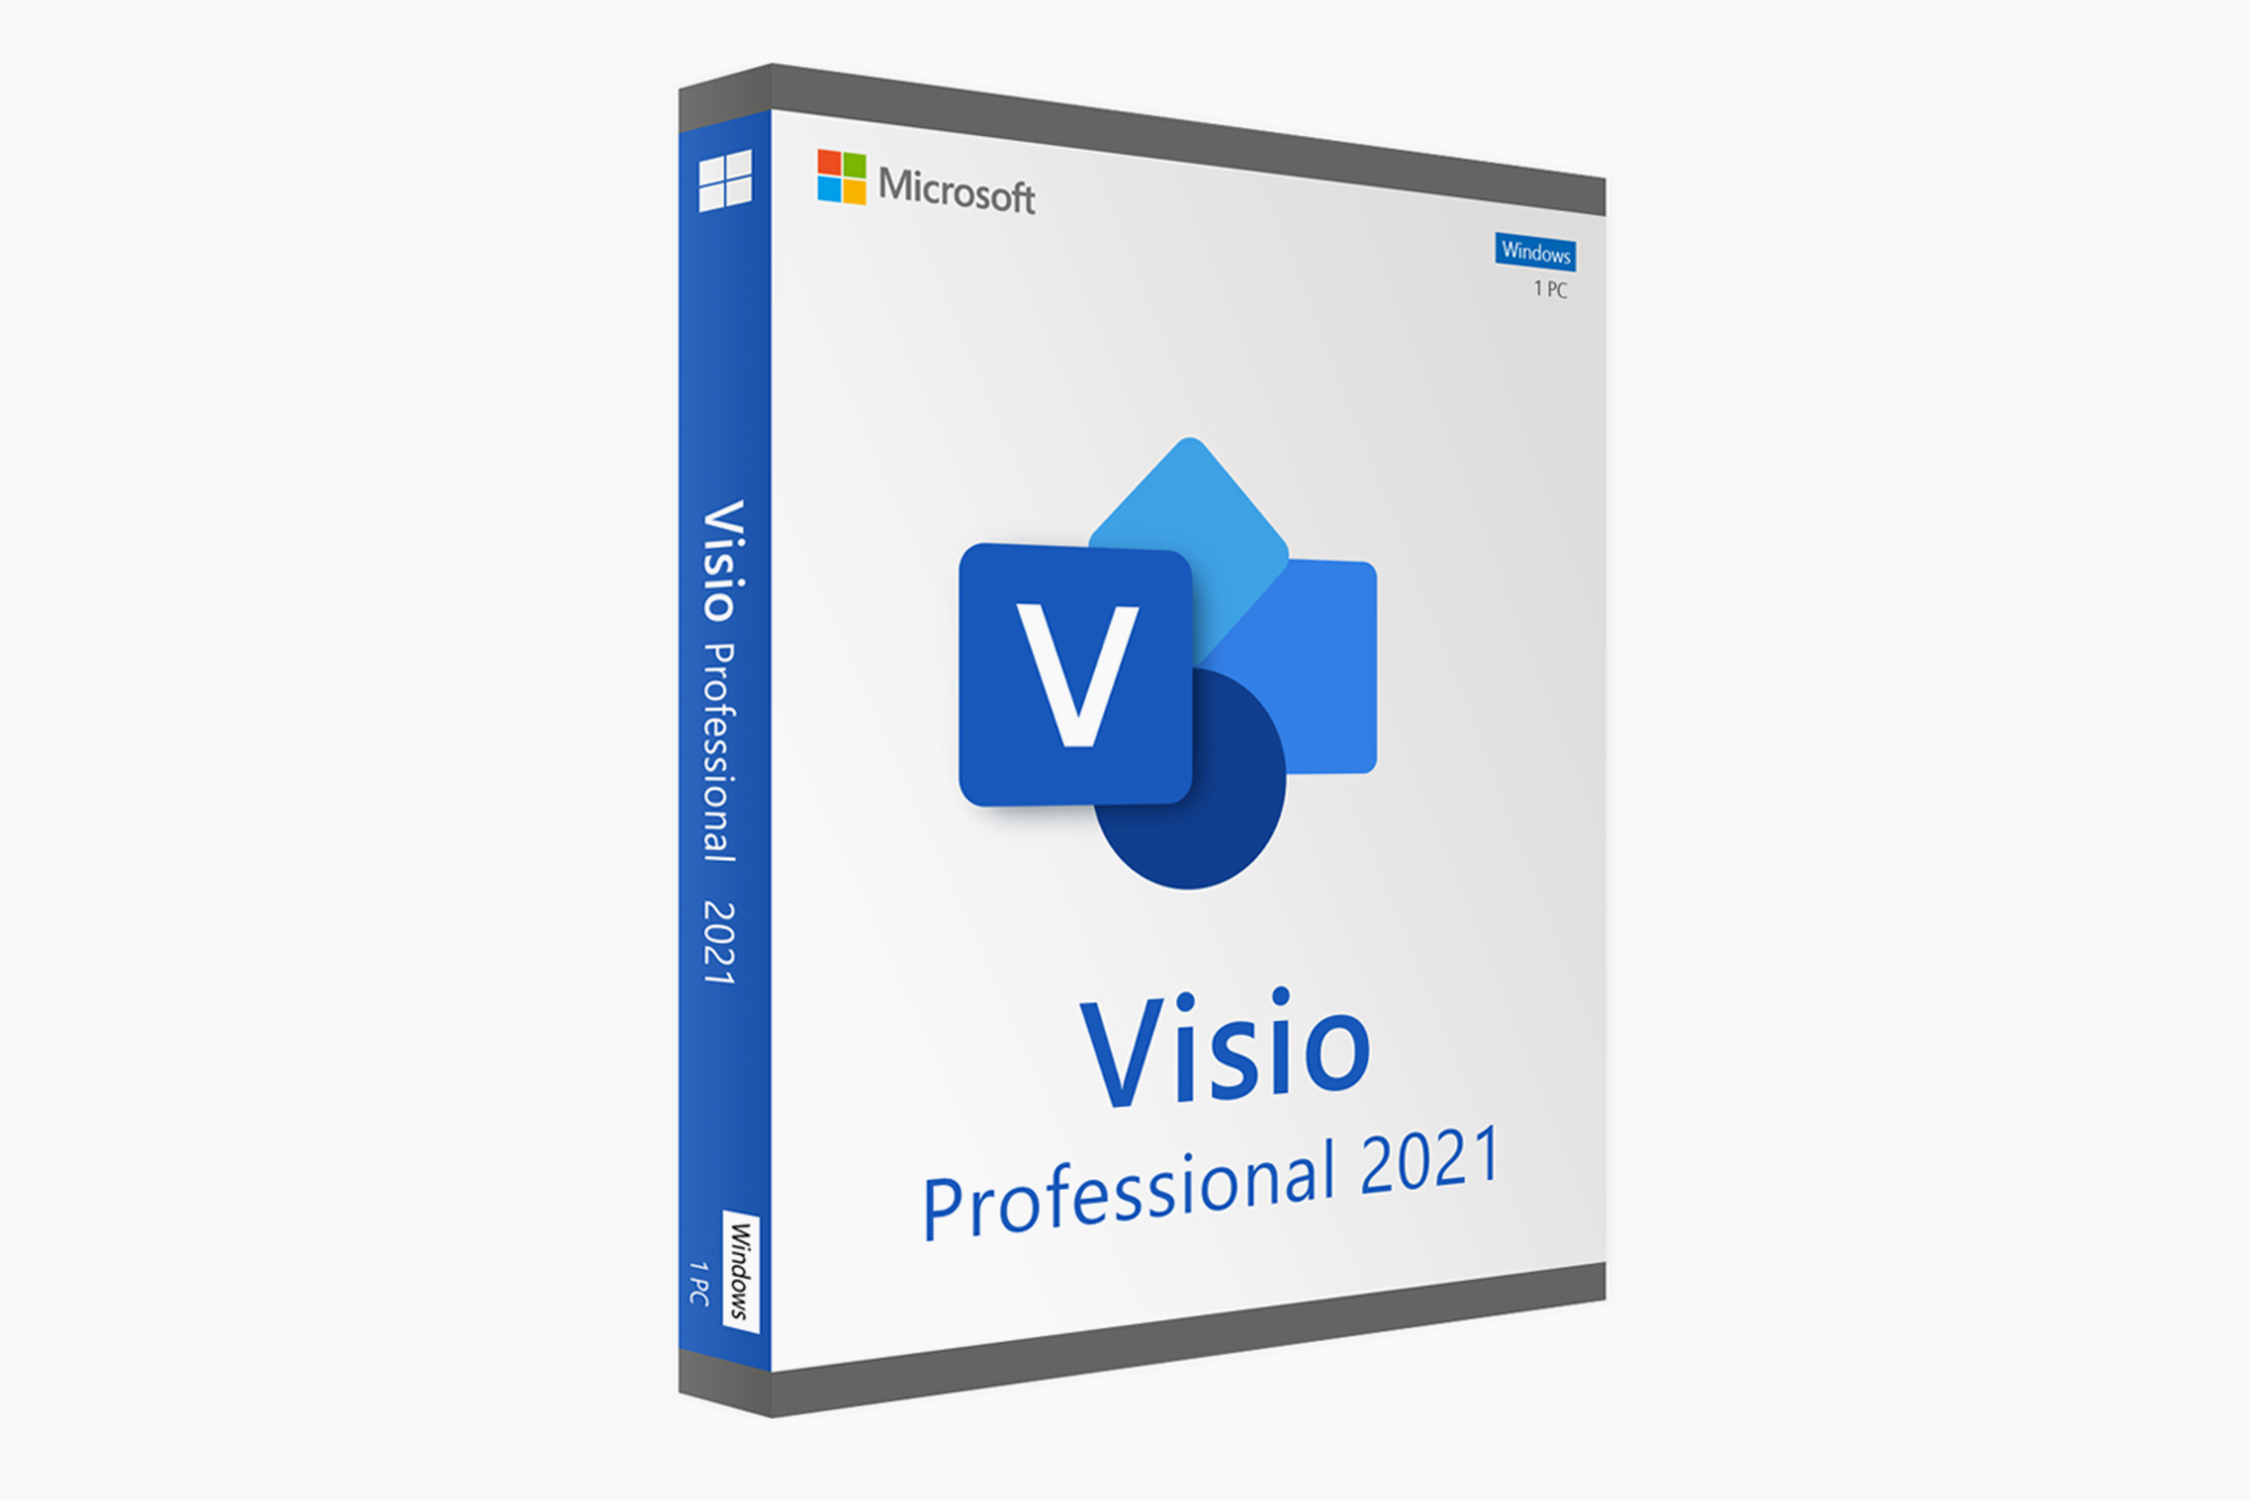 Flash Sale: Microsoft Visio is correct $20 now!